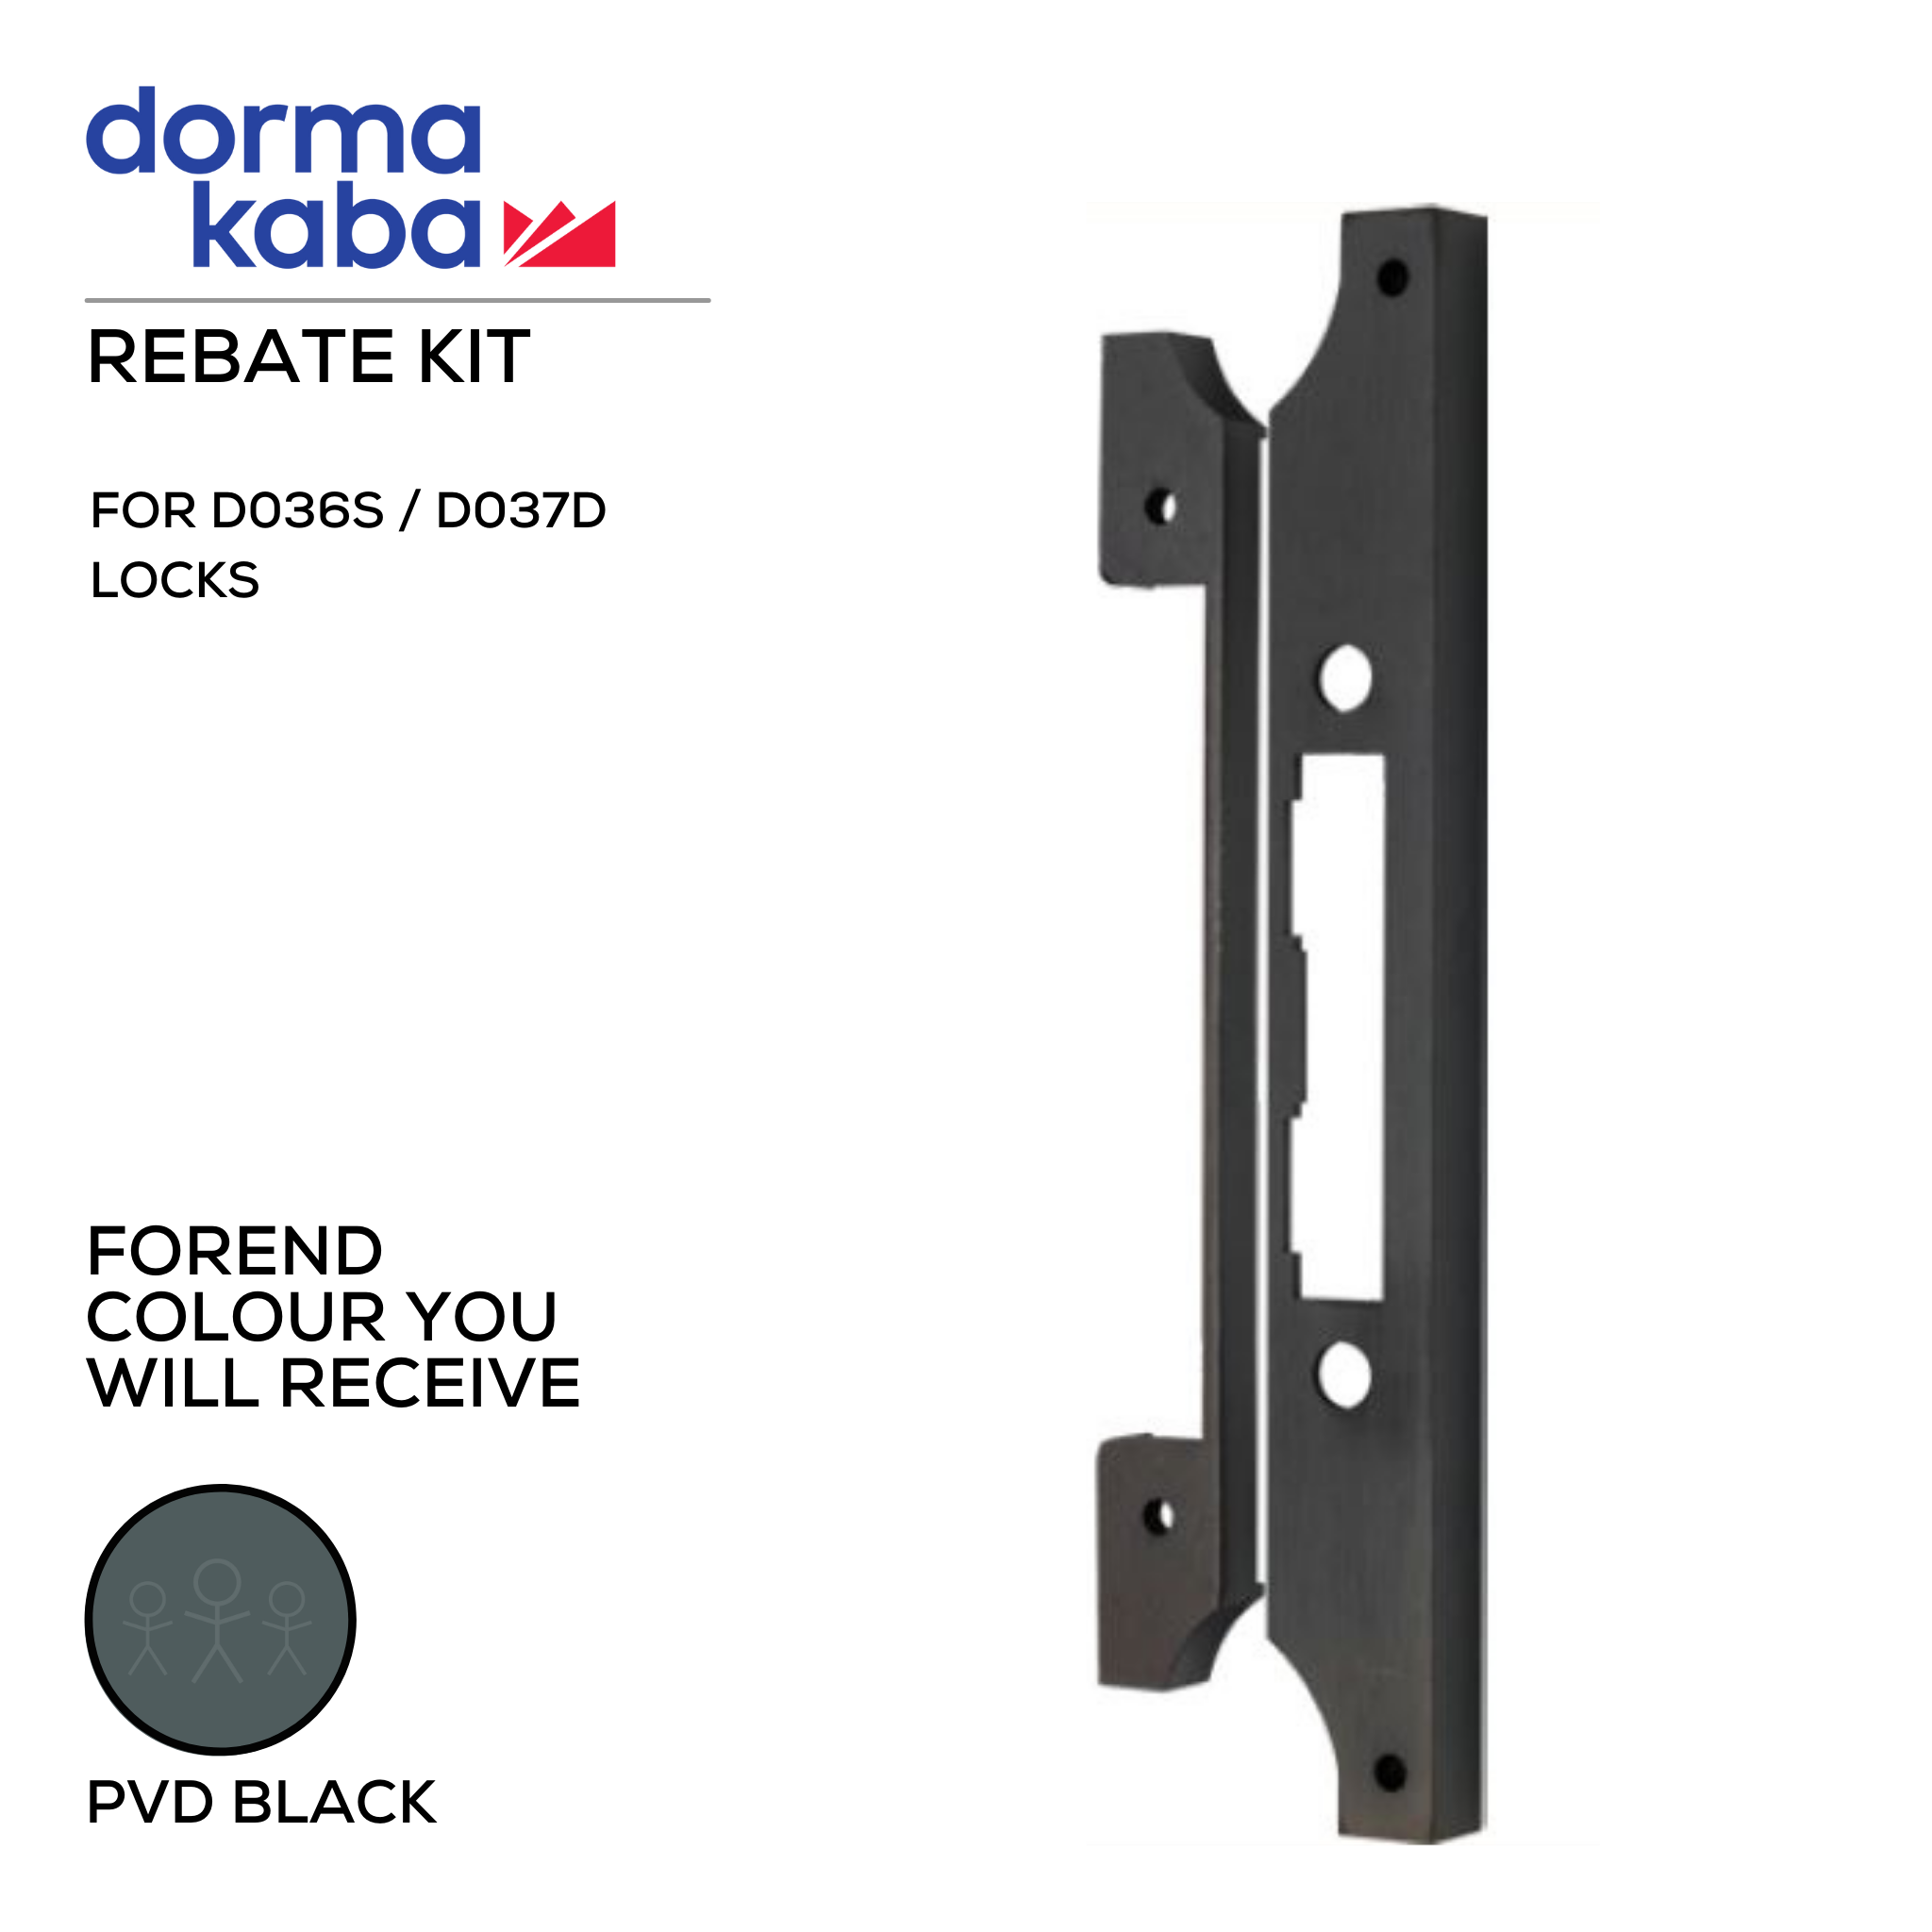 D038R Black EP, Rebate Kit, for D036S and D037D Locks, PVD Black, DORMAKABA